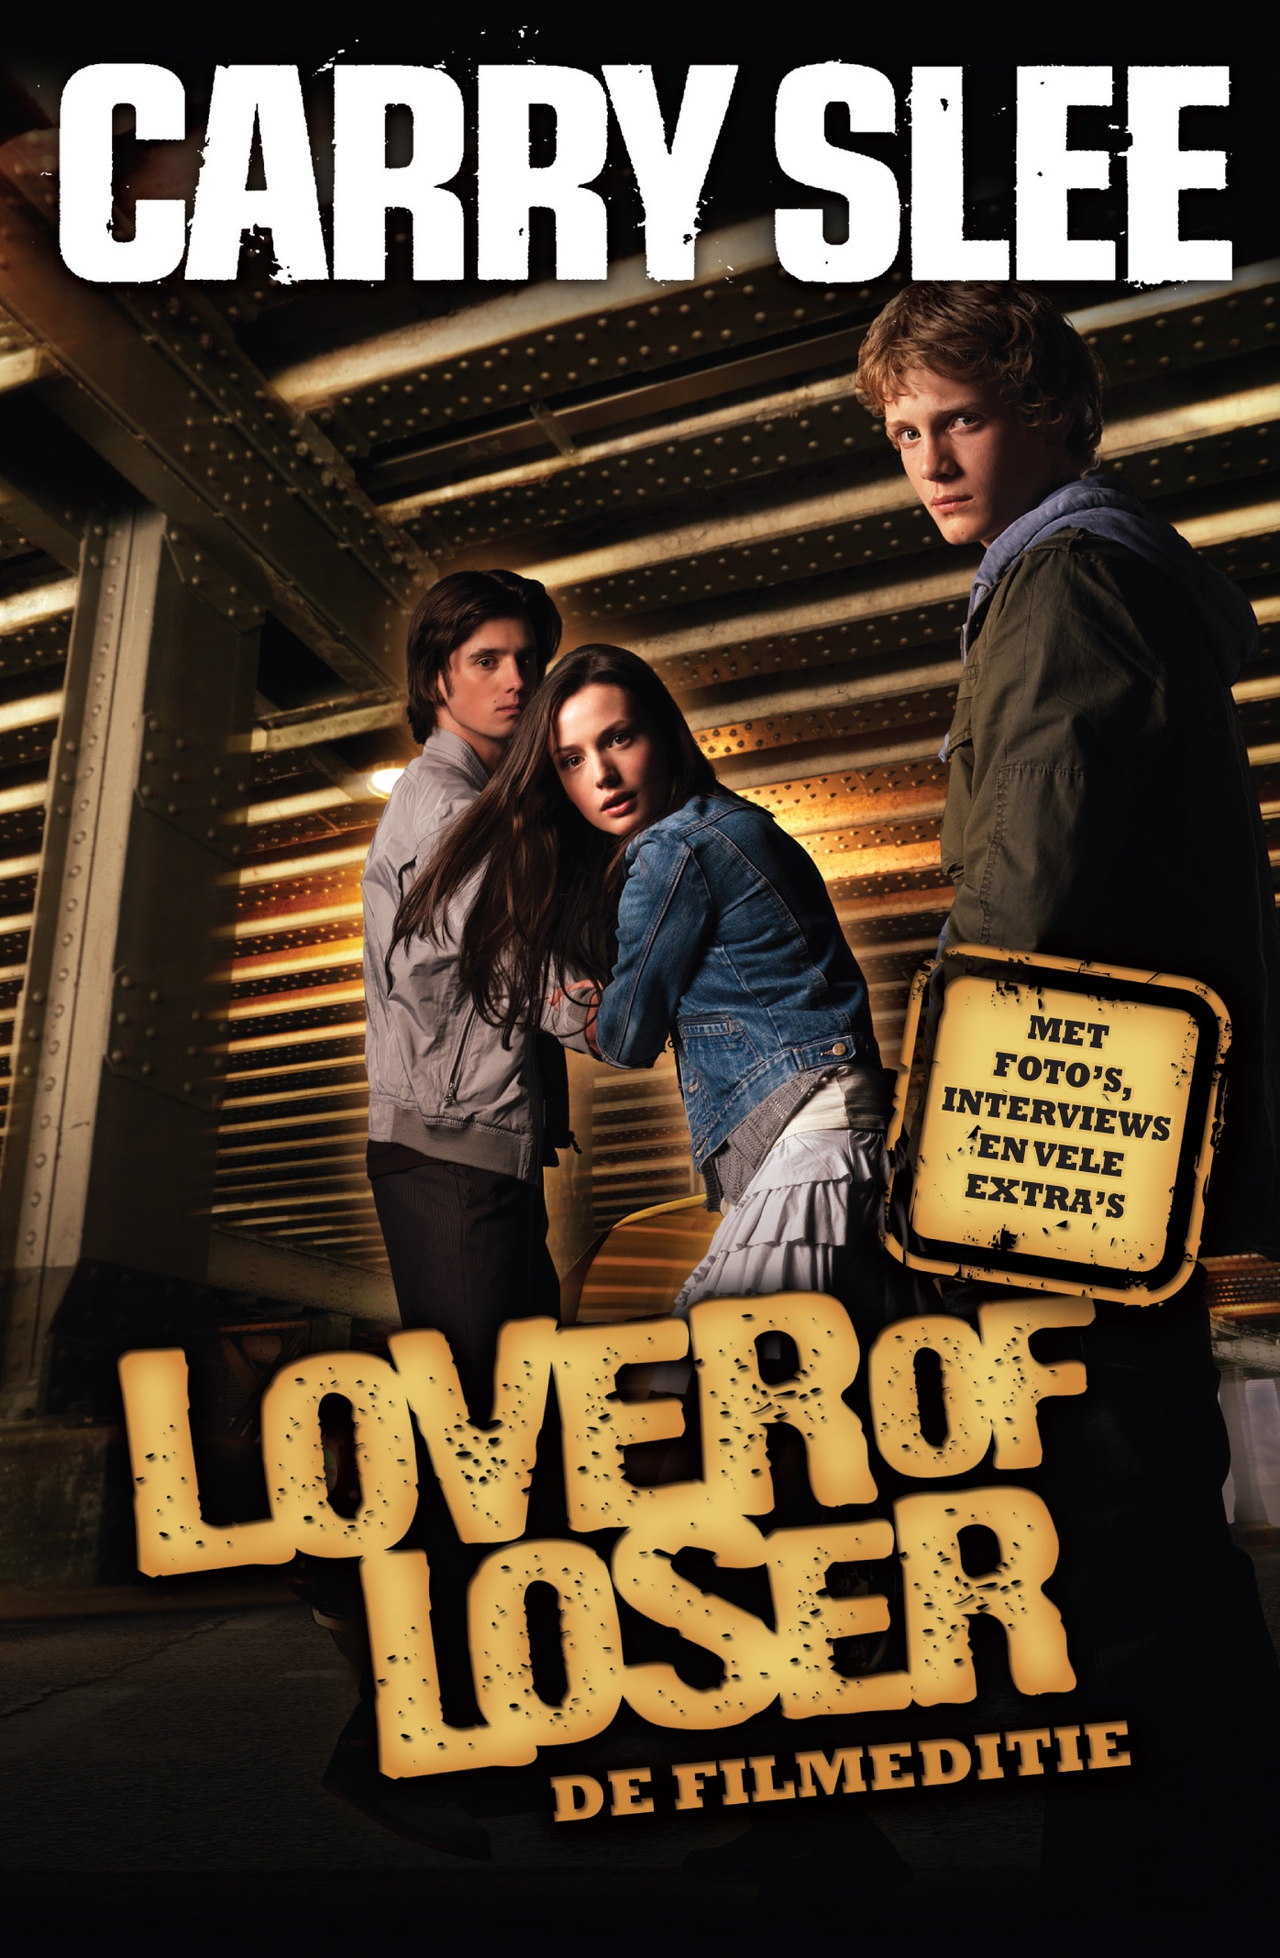 Gaite Jansen در صحنه فیلم سینمایی Lover or Loser به همراه Martijn Lakemeier و Ruud Feltkamp